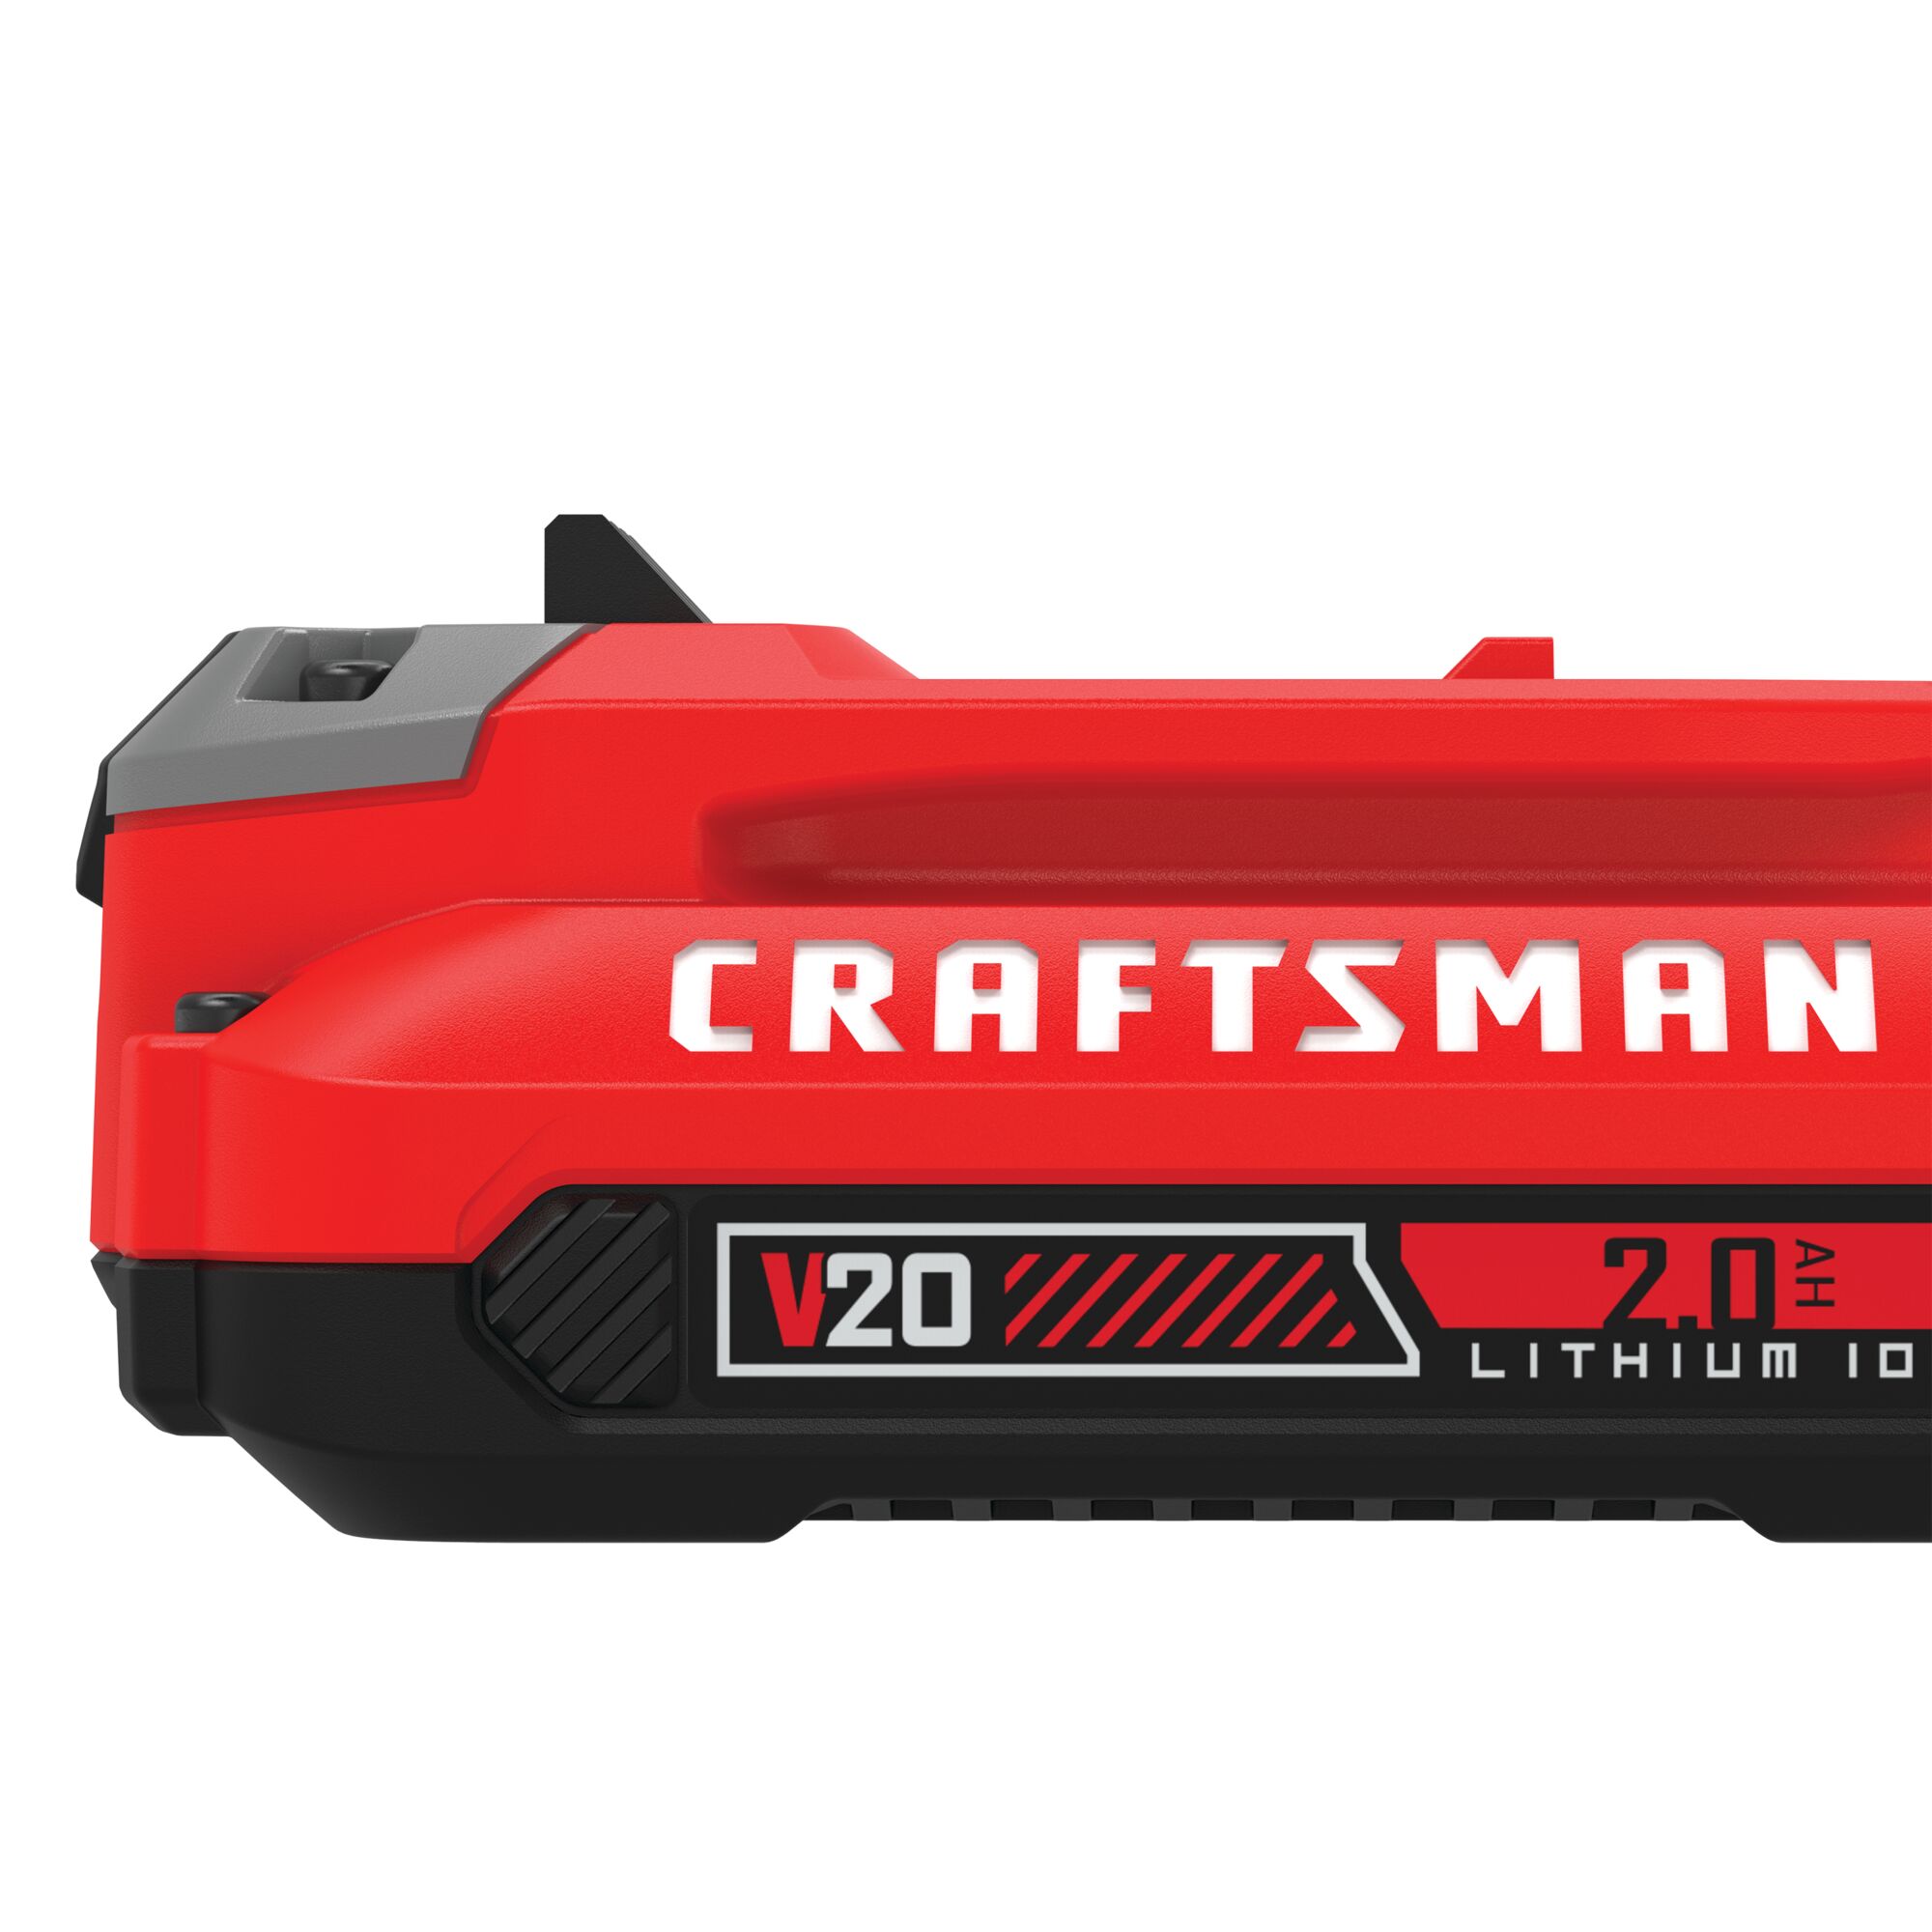 V20* 2.0Ah Lithium Ion Starter Kit | CRAFTSMAN